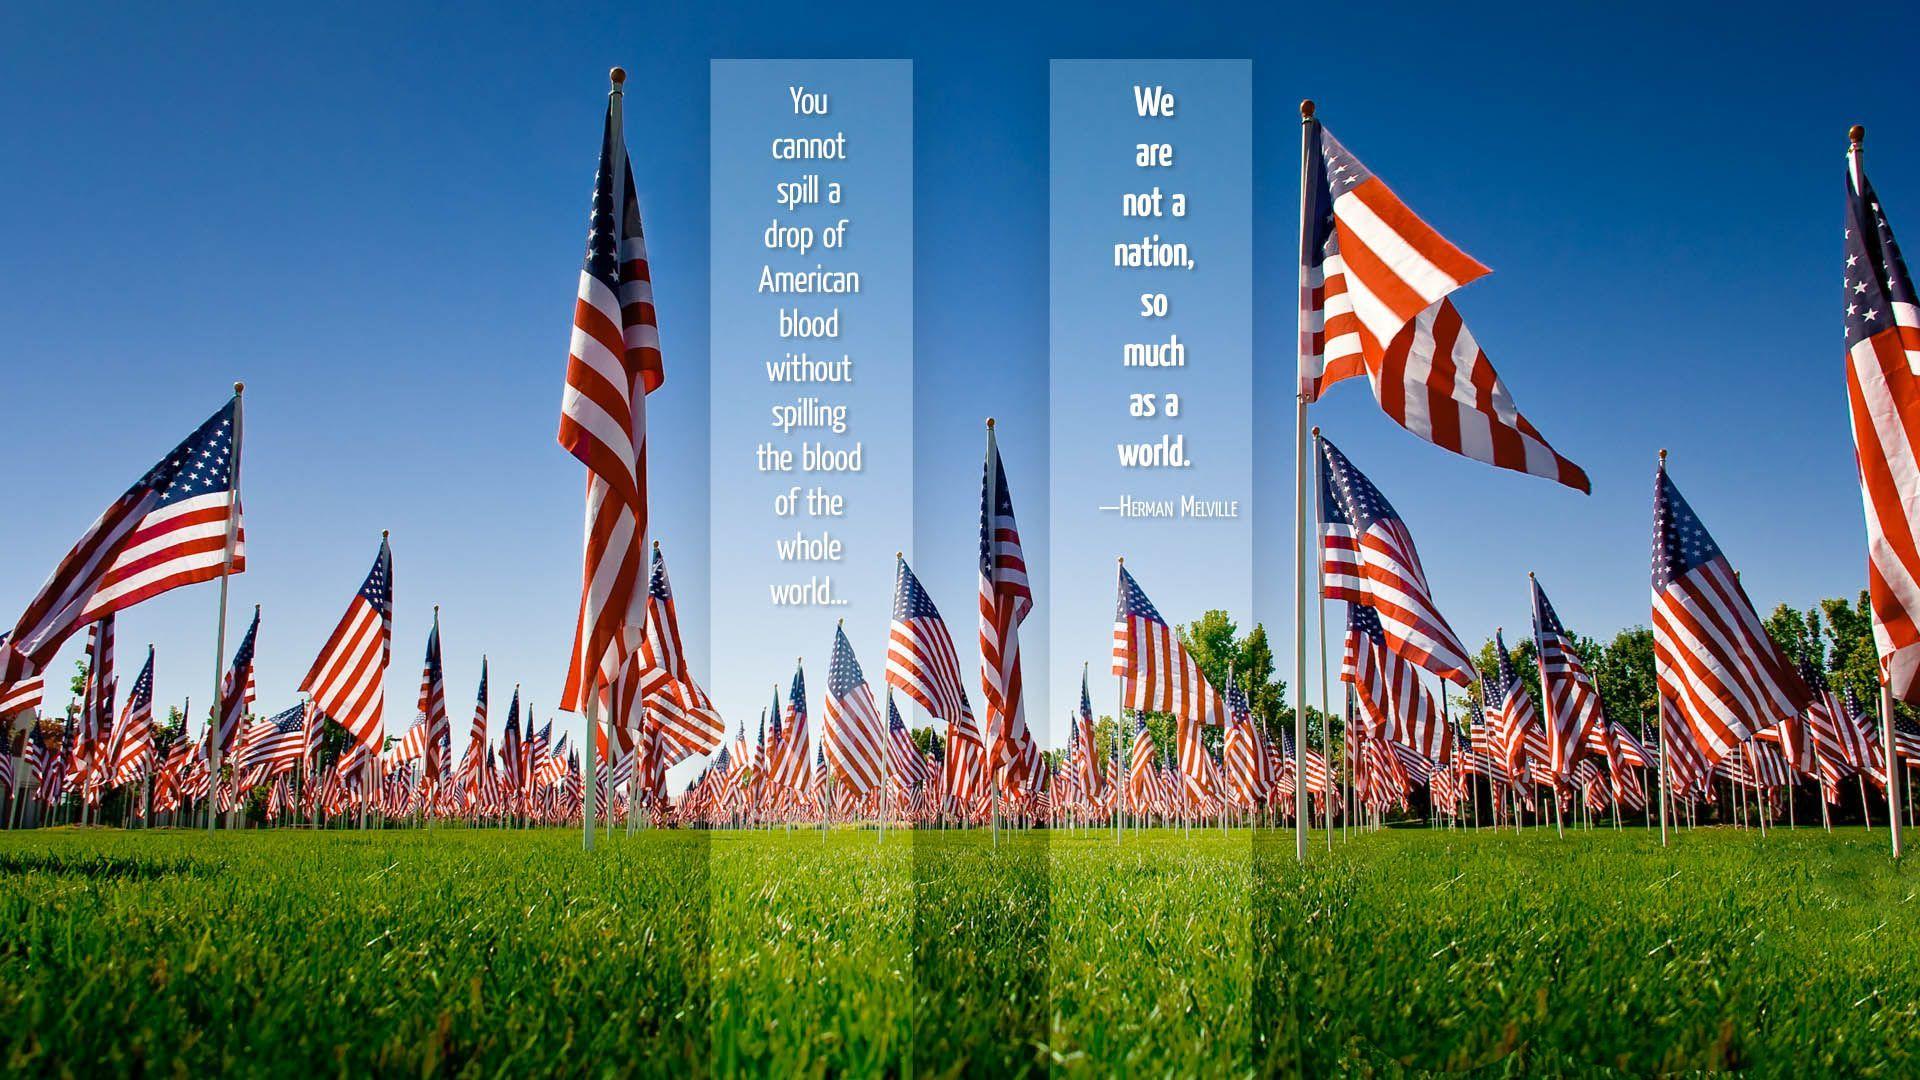 Patriotic Eagle Background Image. Patriotic 9 11